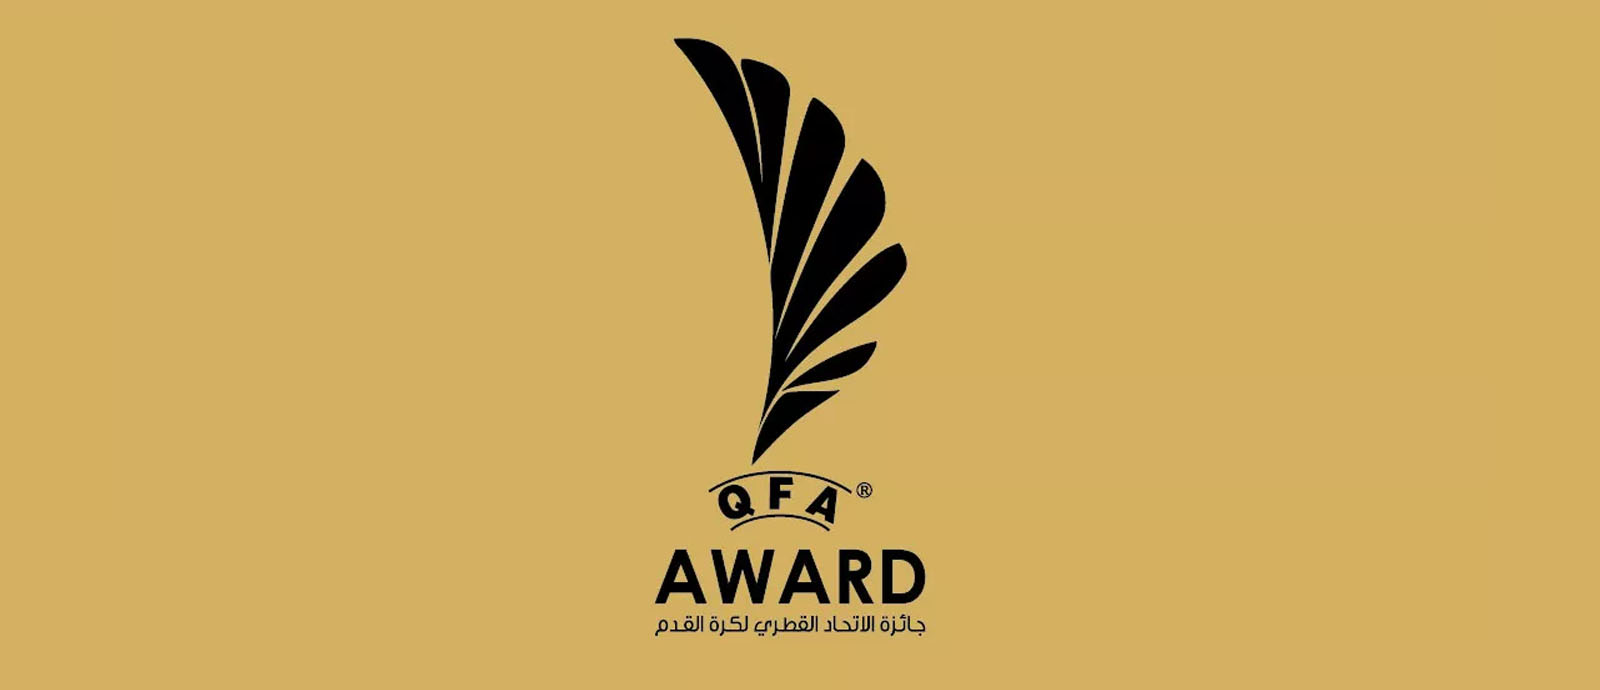 Qatar Football Association Award 